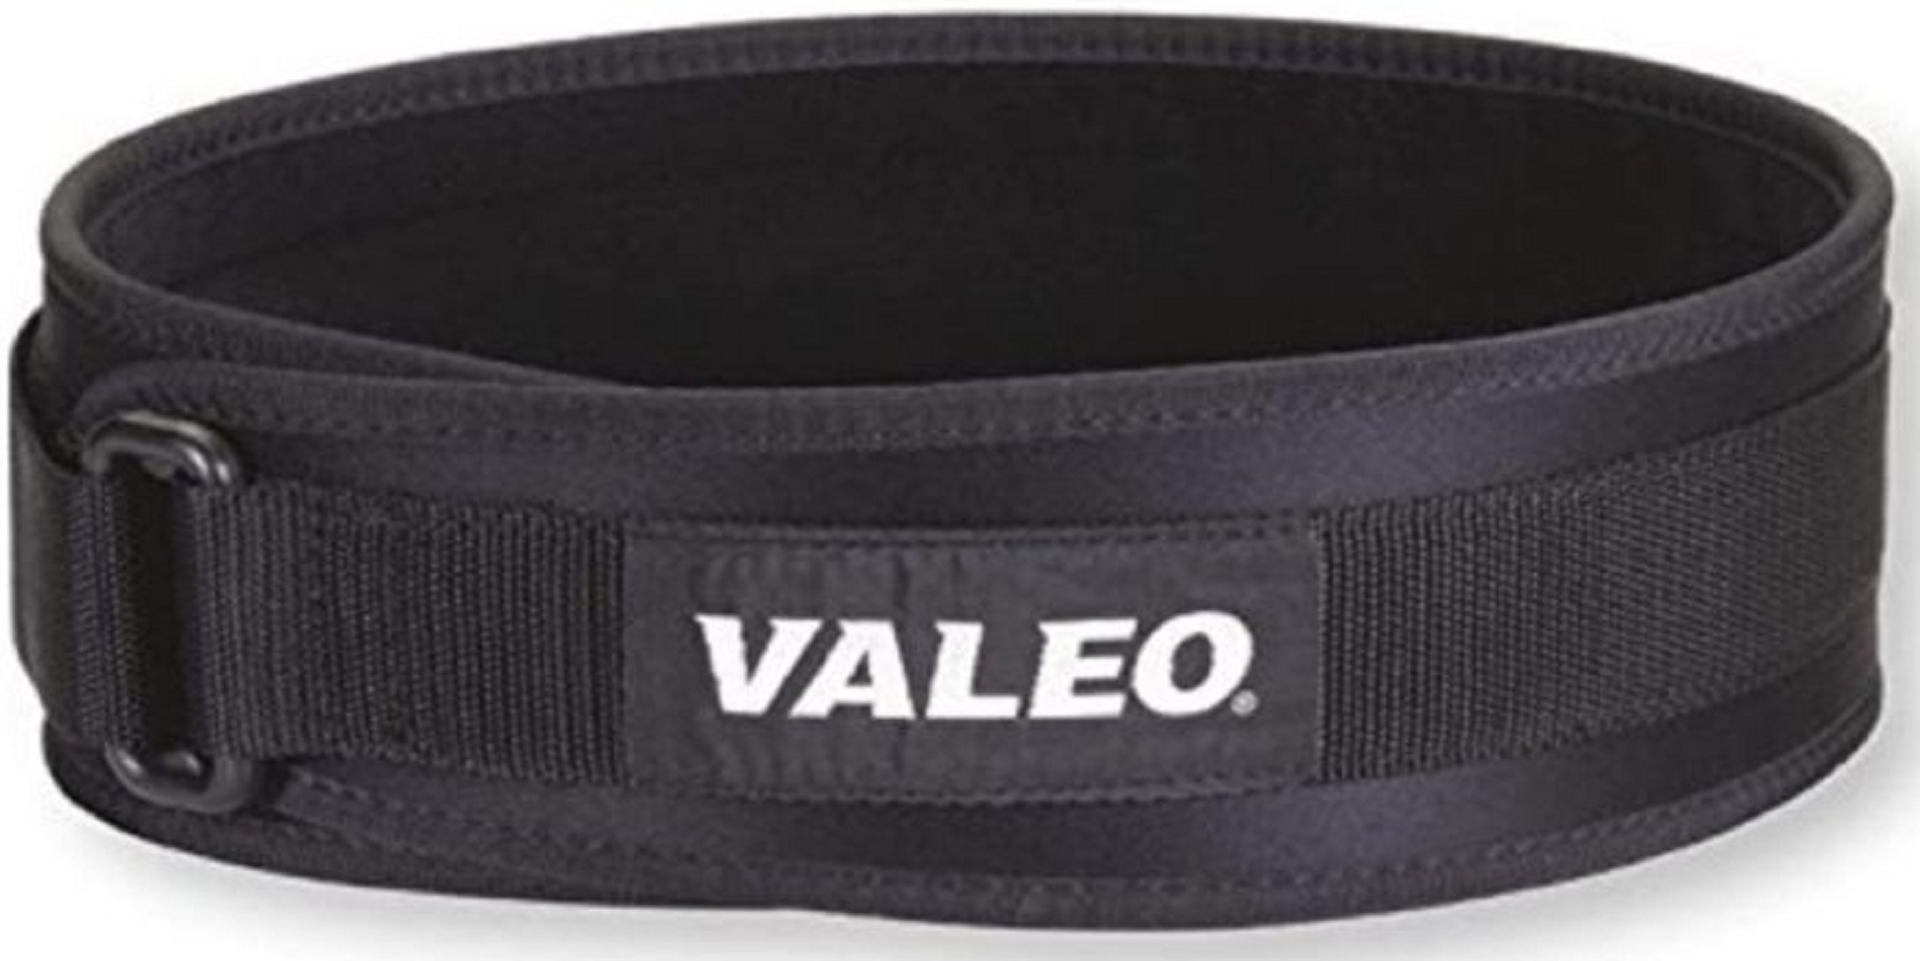 valeo weightlifting belt